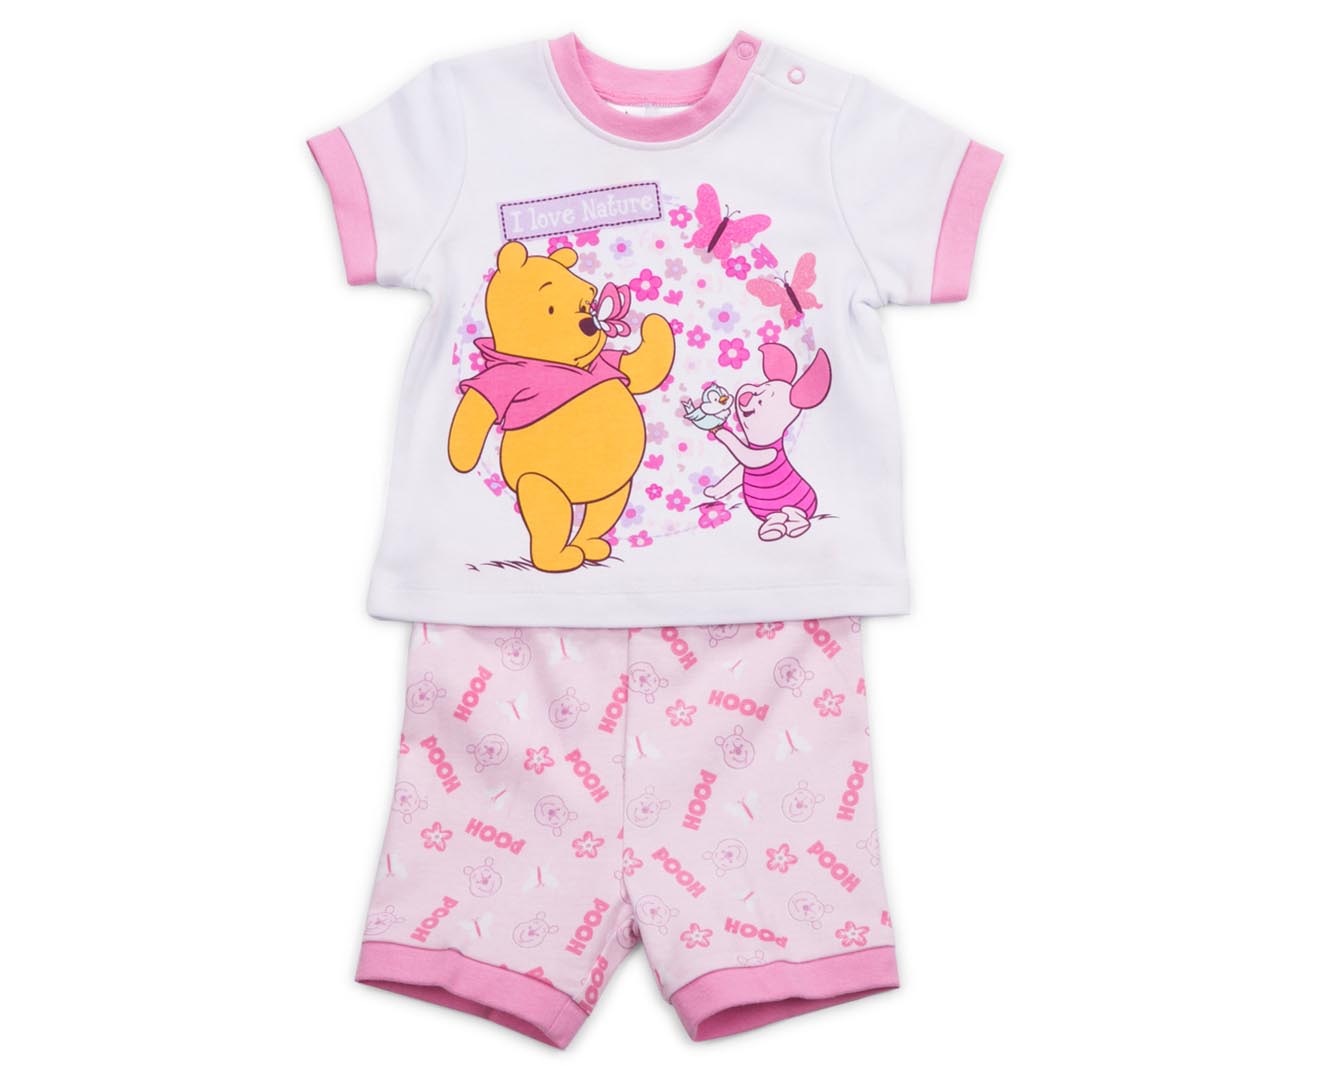 Winnie The Pooh PJ Set - White/Pink